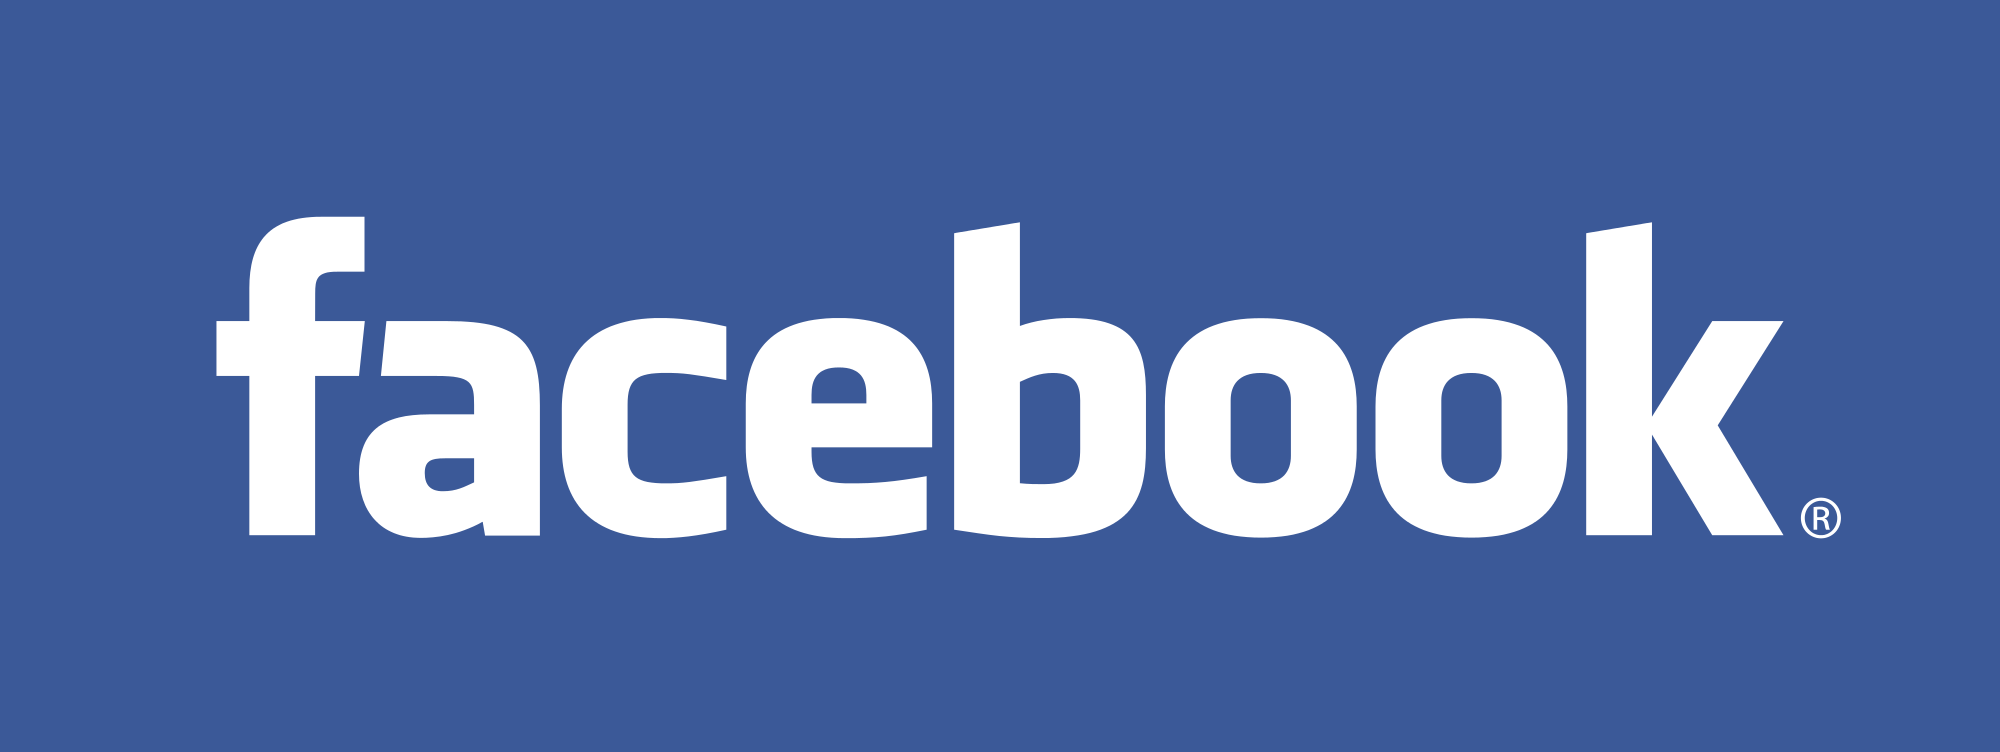 Faceboook Logo - File:Facebook.svg - Wikimedia Commons